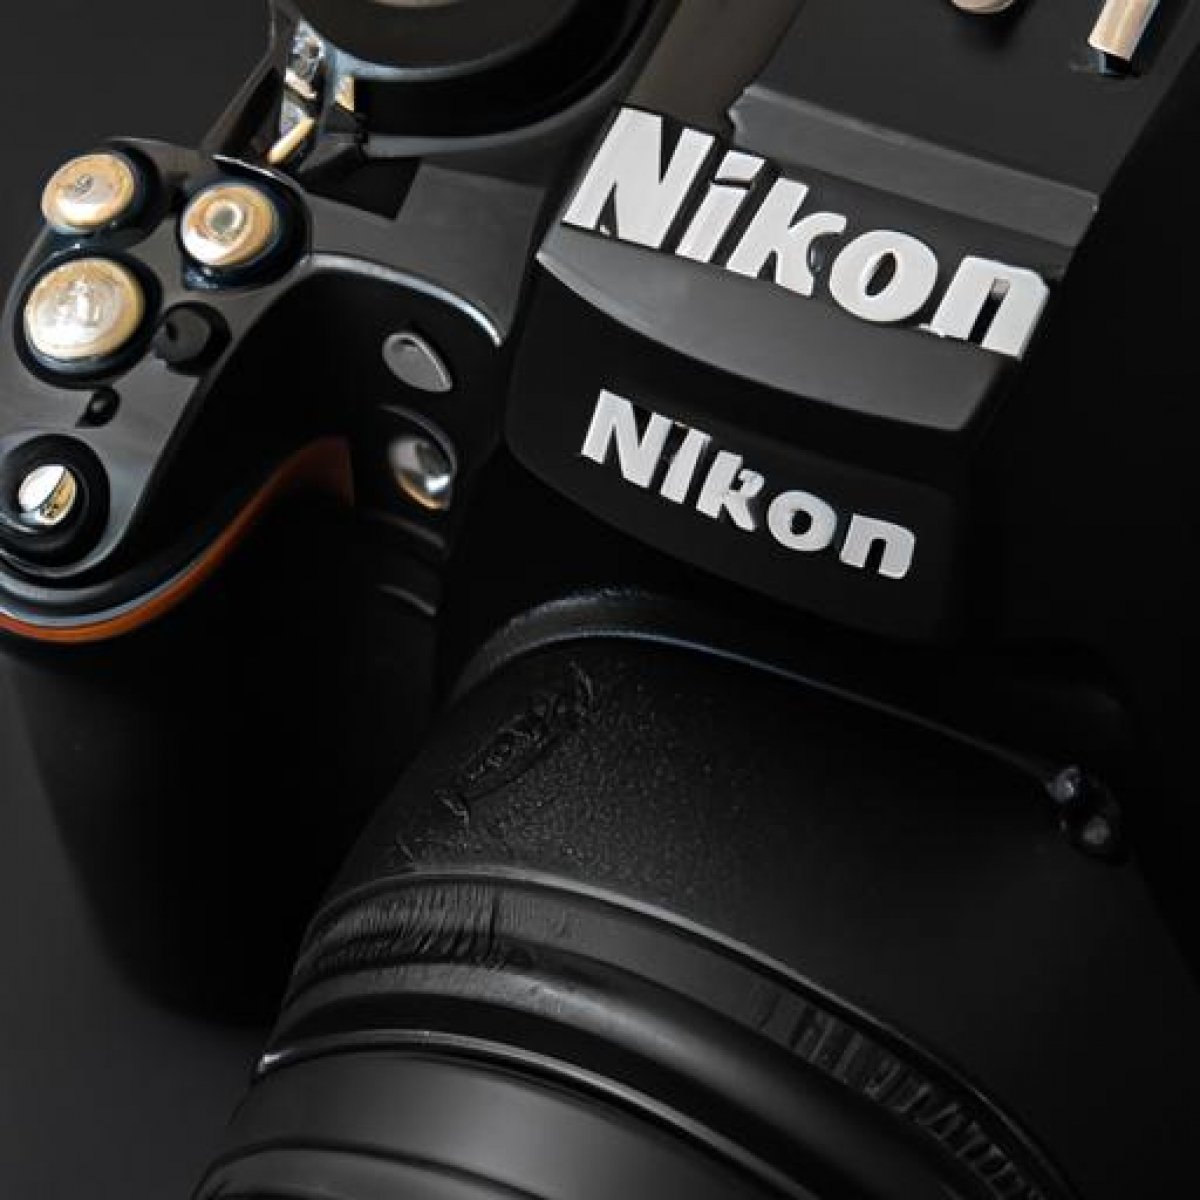 Nikon d7500 digital slr camera